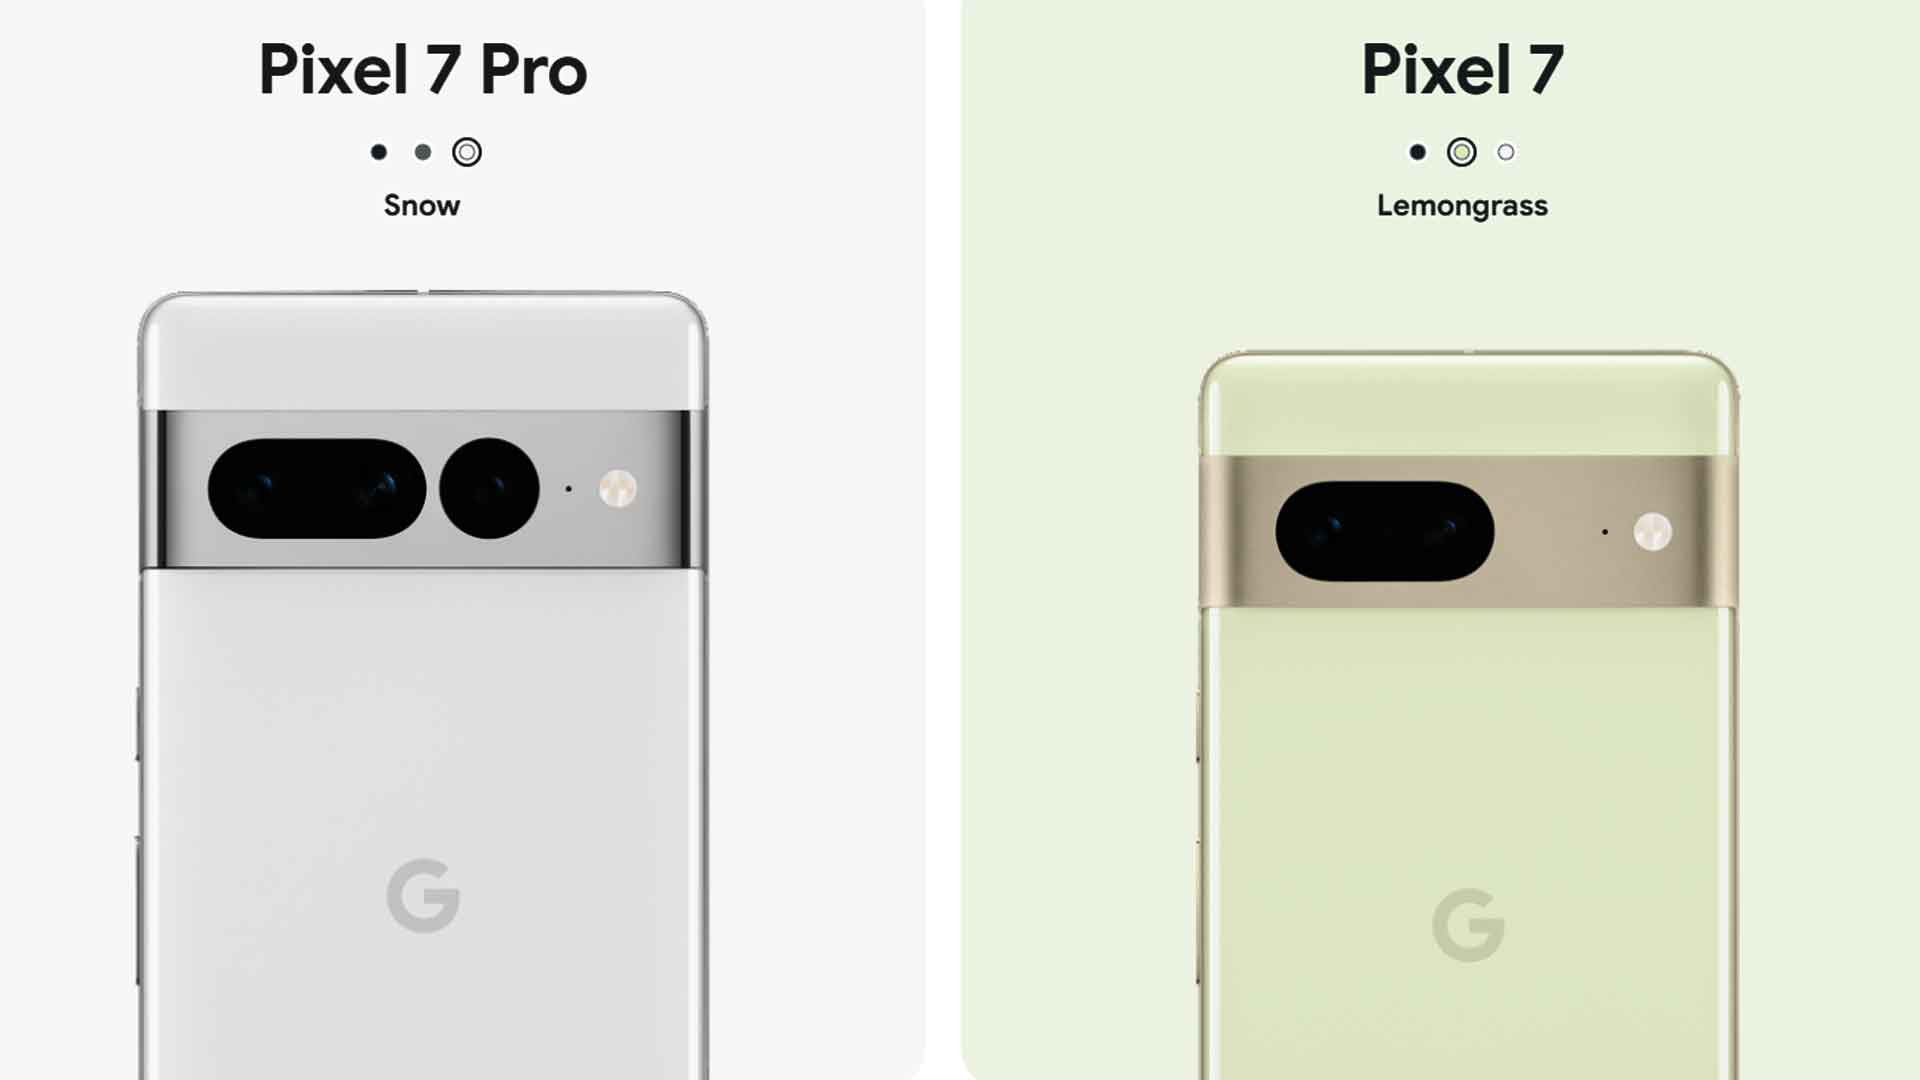 Pixel 7 Google Pixel 7 Pixel 7 Pro Google phone Pixel 7 phone Pixel 7 price android 13 watch MadeByGoogle event live